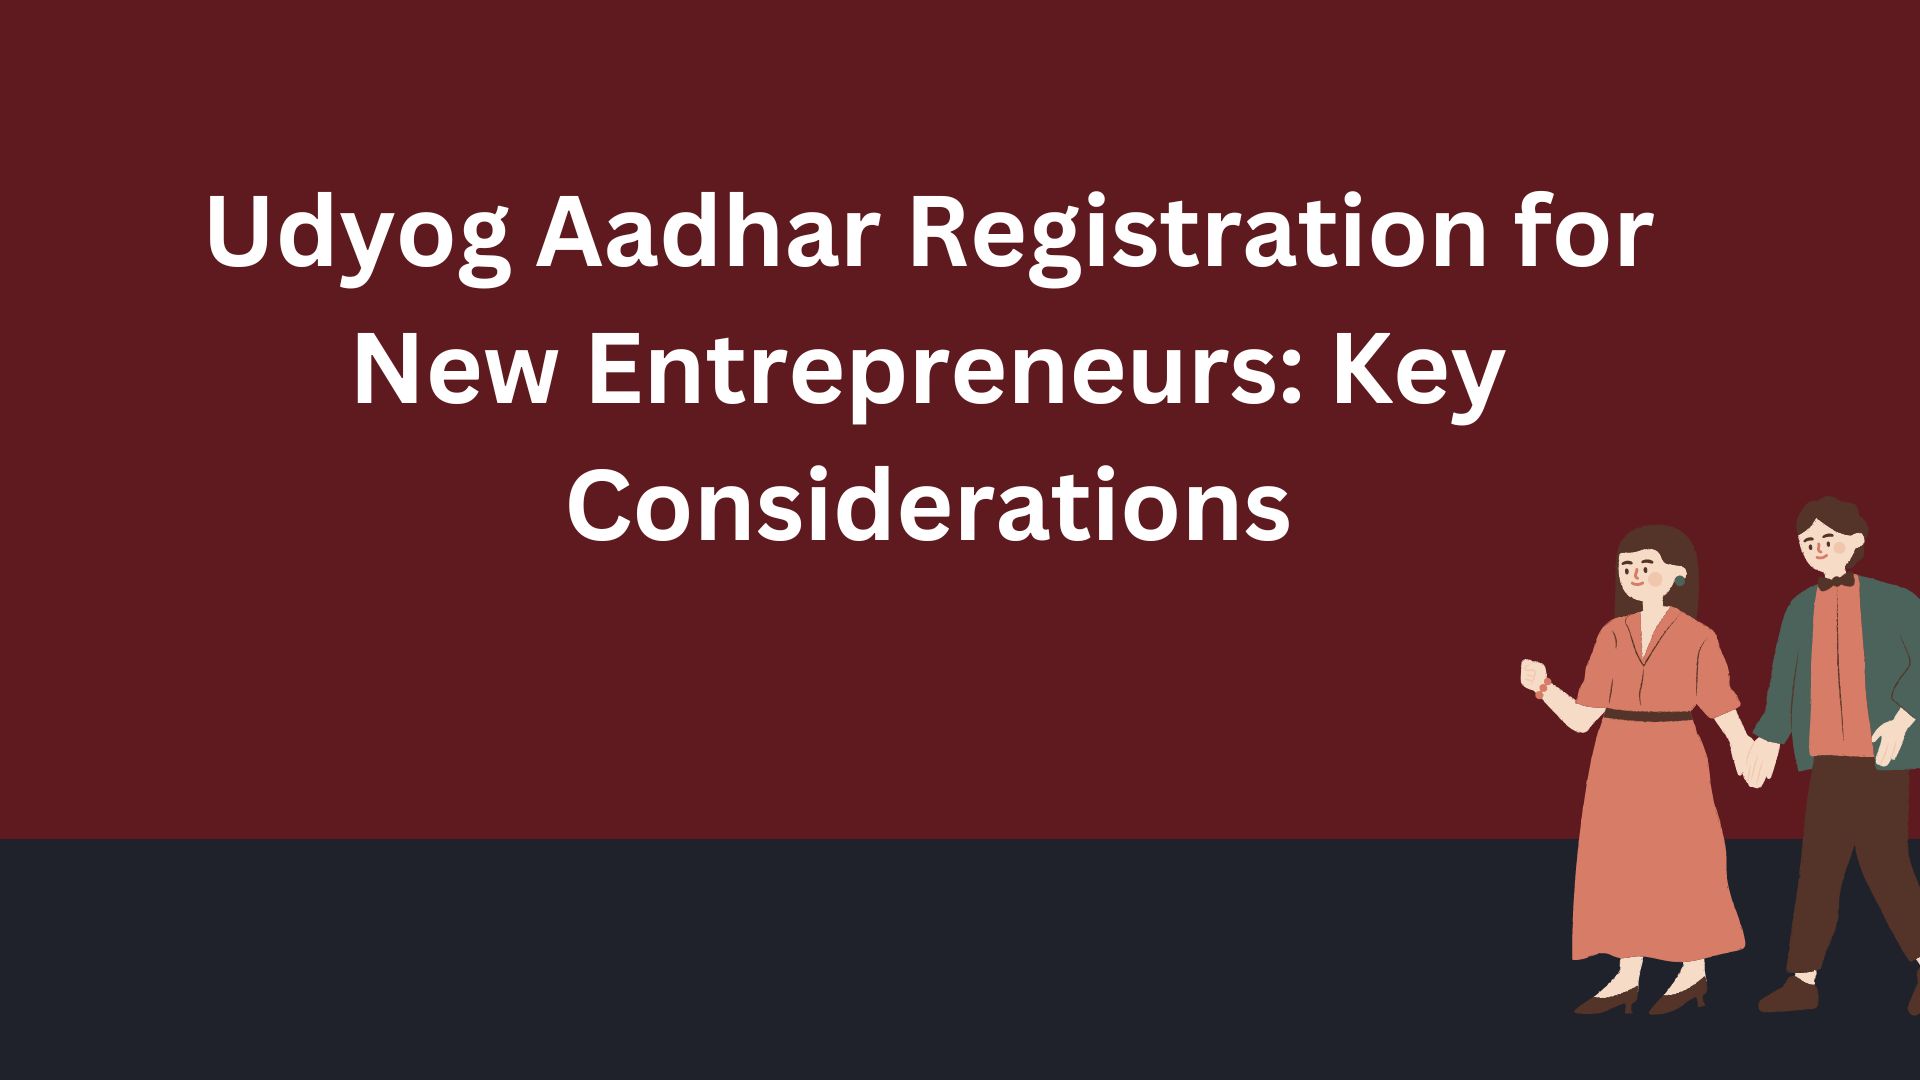 Udyog Aadhar Registration for New Entrepreneurs: Key Considerations